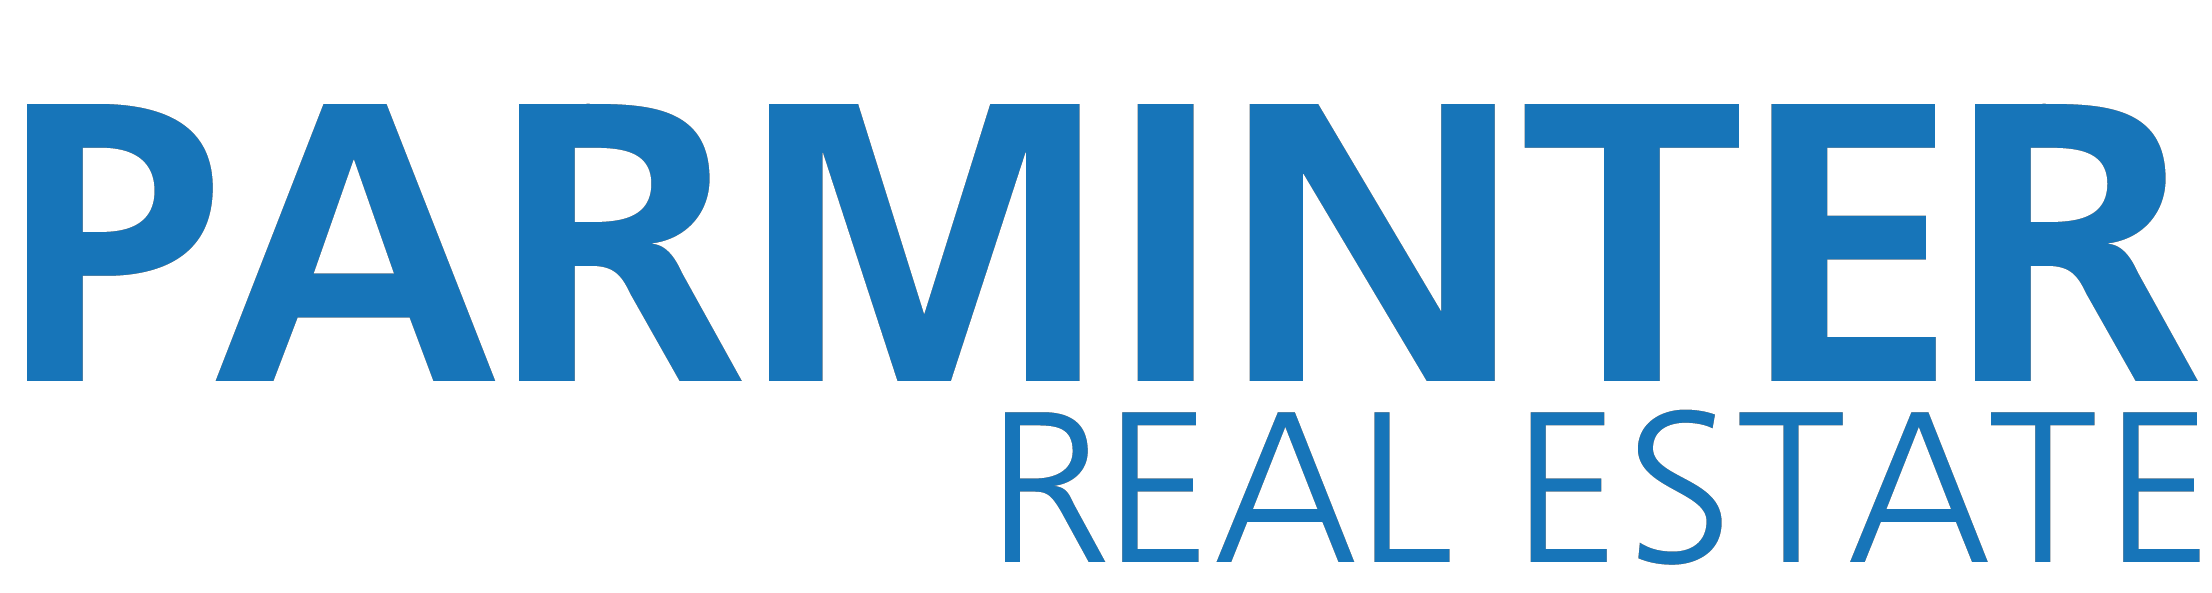 Parminter Real Estate logo